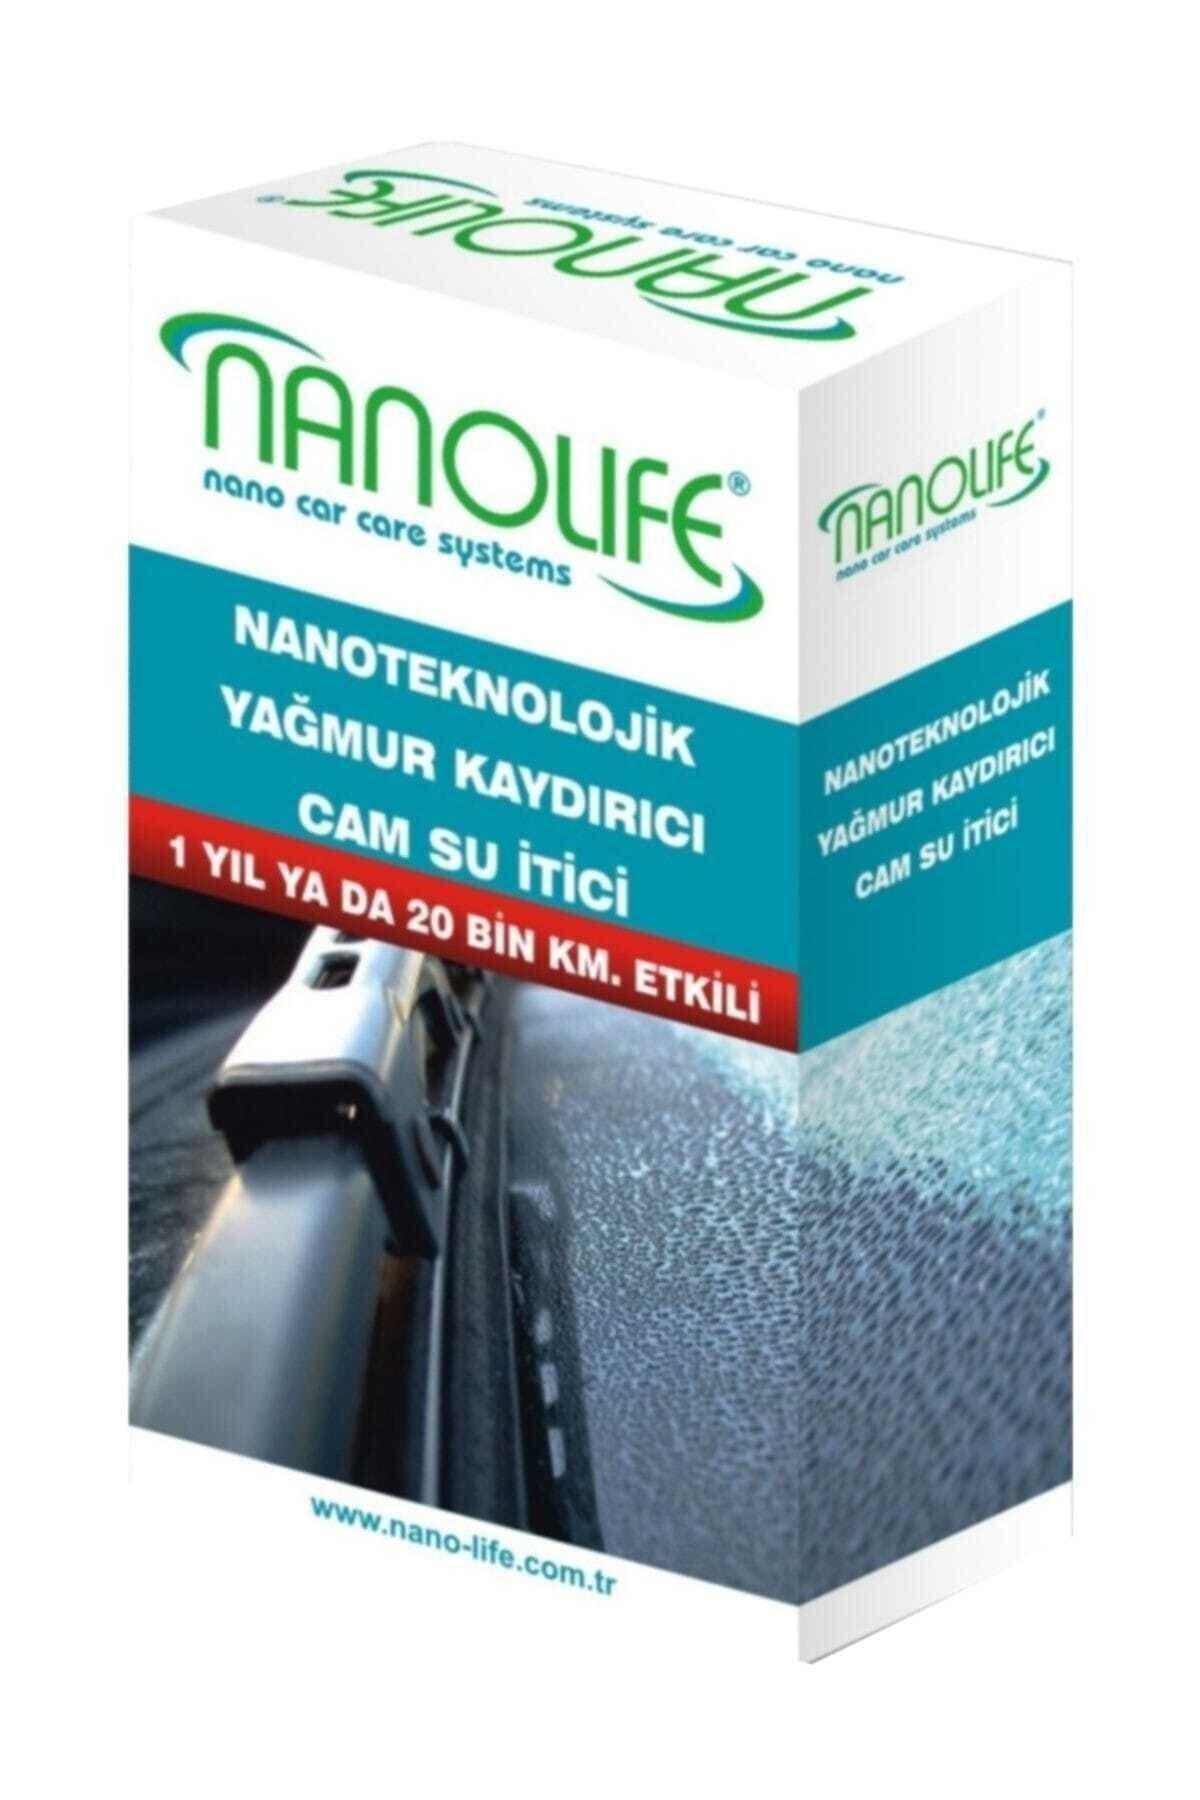 NanoLife 1 YIL-20 BİN.KM.ETKİLİ NANO YAĞMUR KAYDIRICI